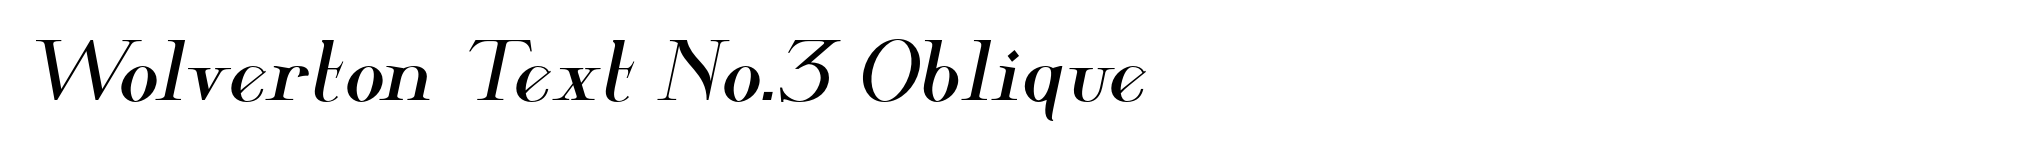 Wolverton Text No.3 Oblique image